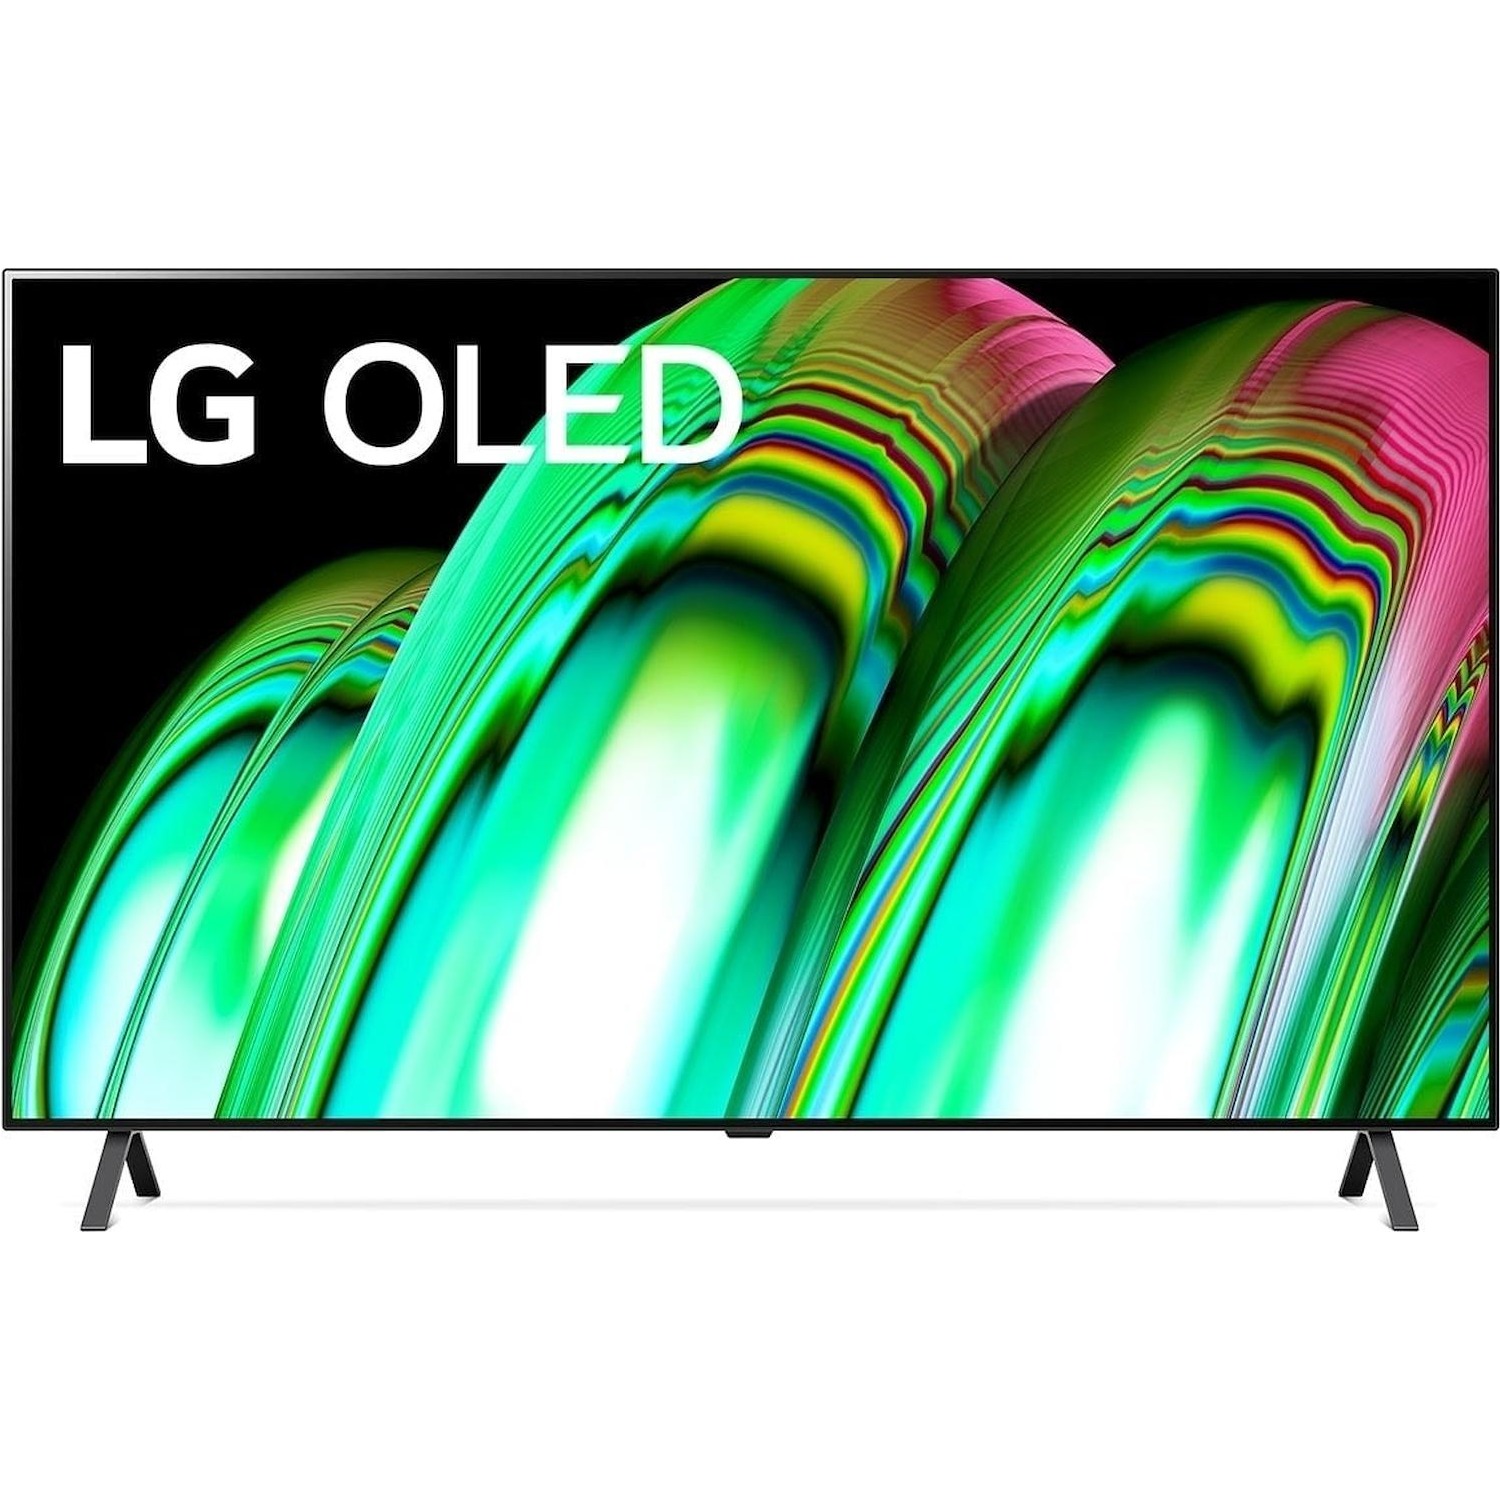 Immagine per TV OLED UHD 4K Smart LG OLED48A29 da DIMOStore